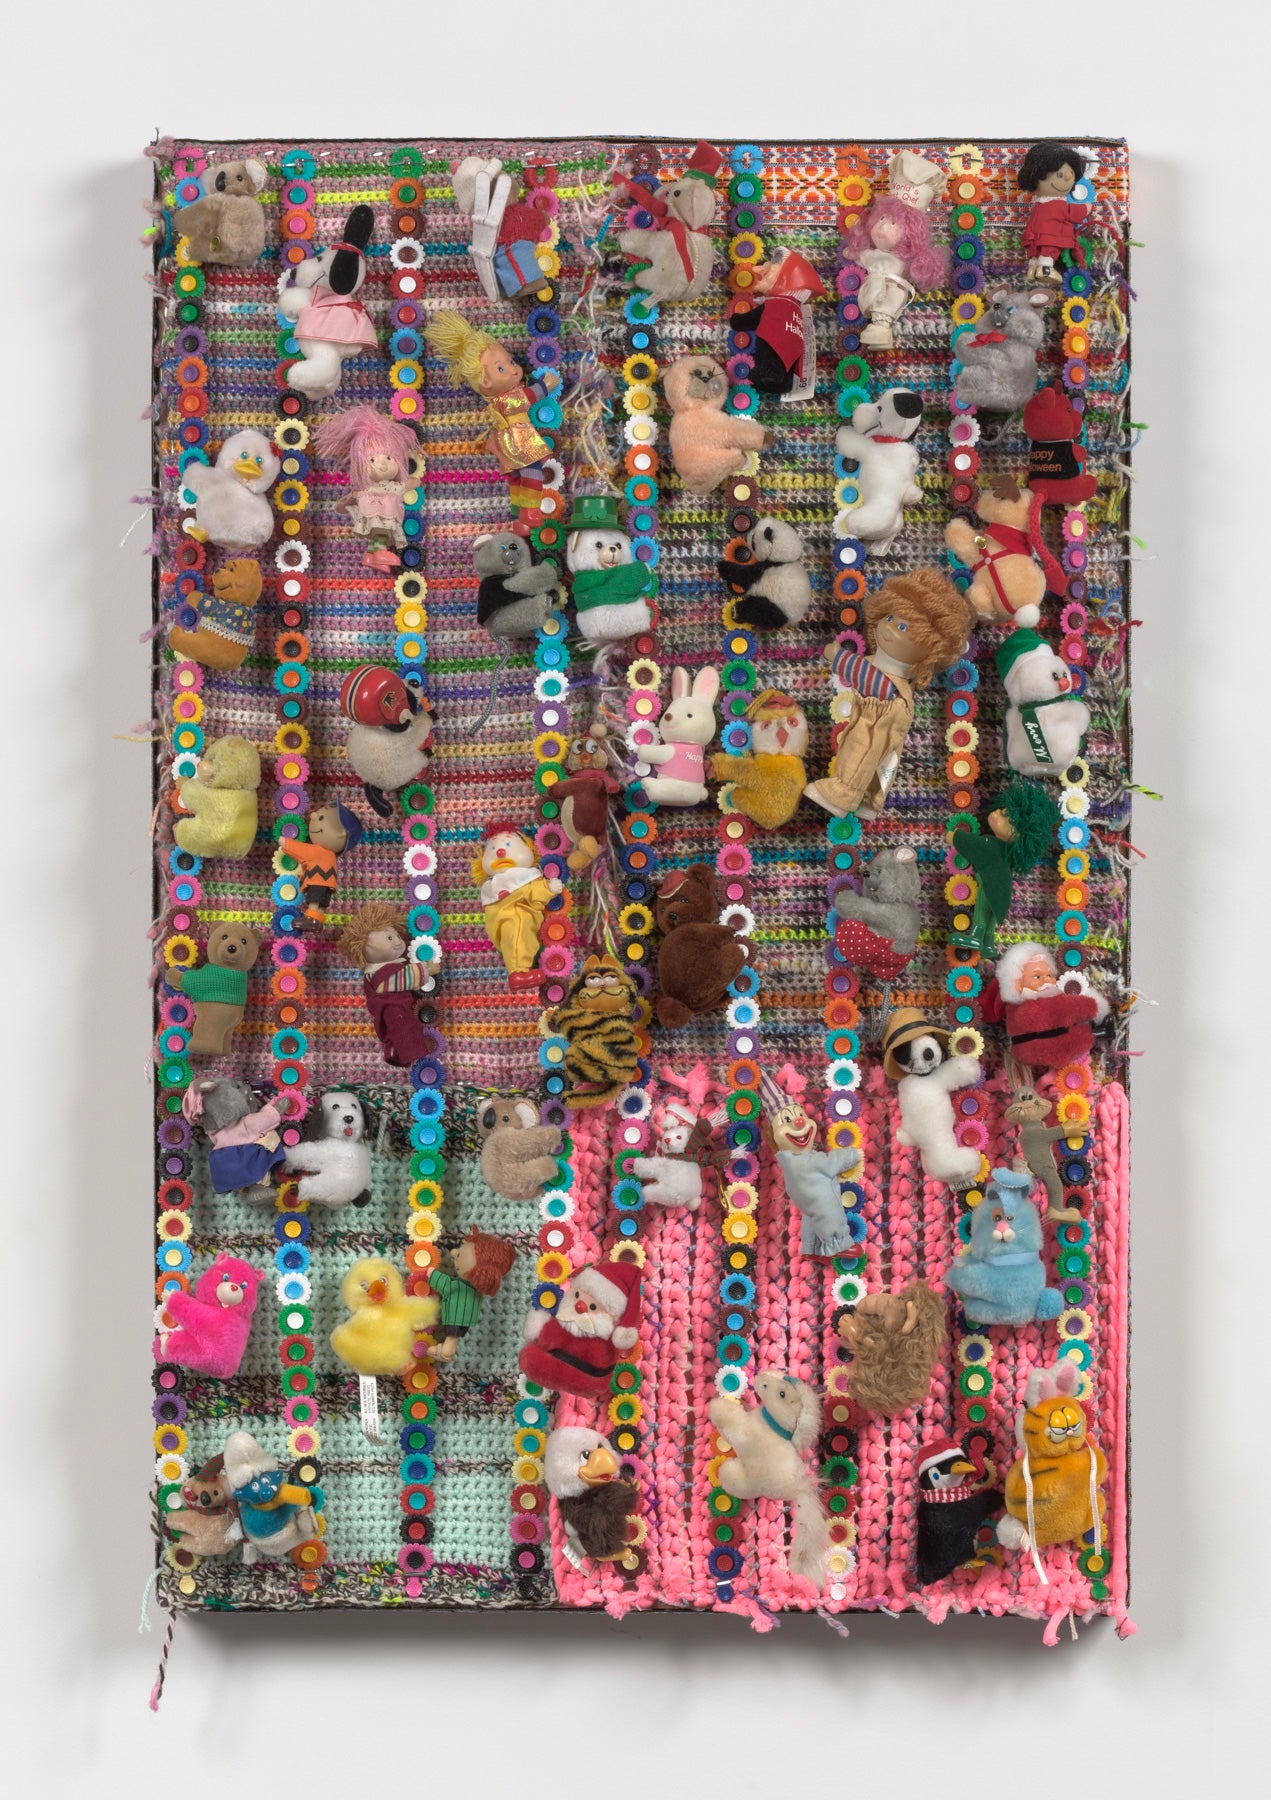 Kelly McCafferty, "crochet hugger"